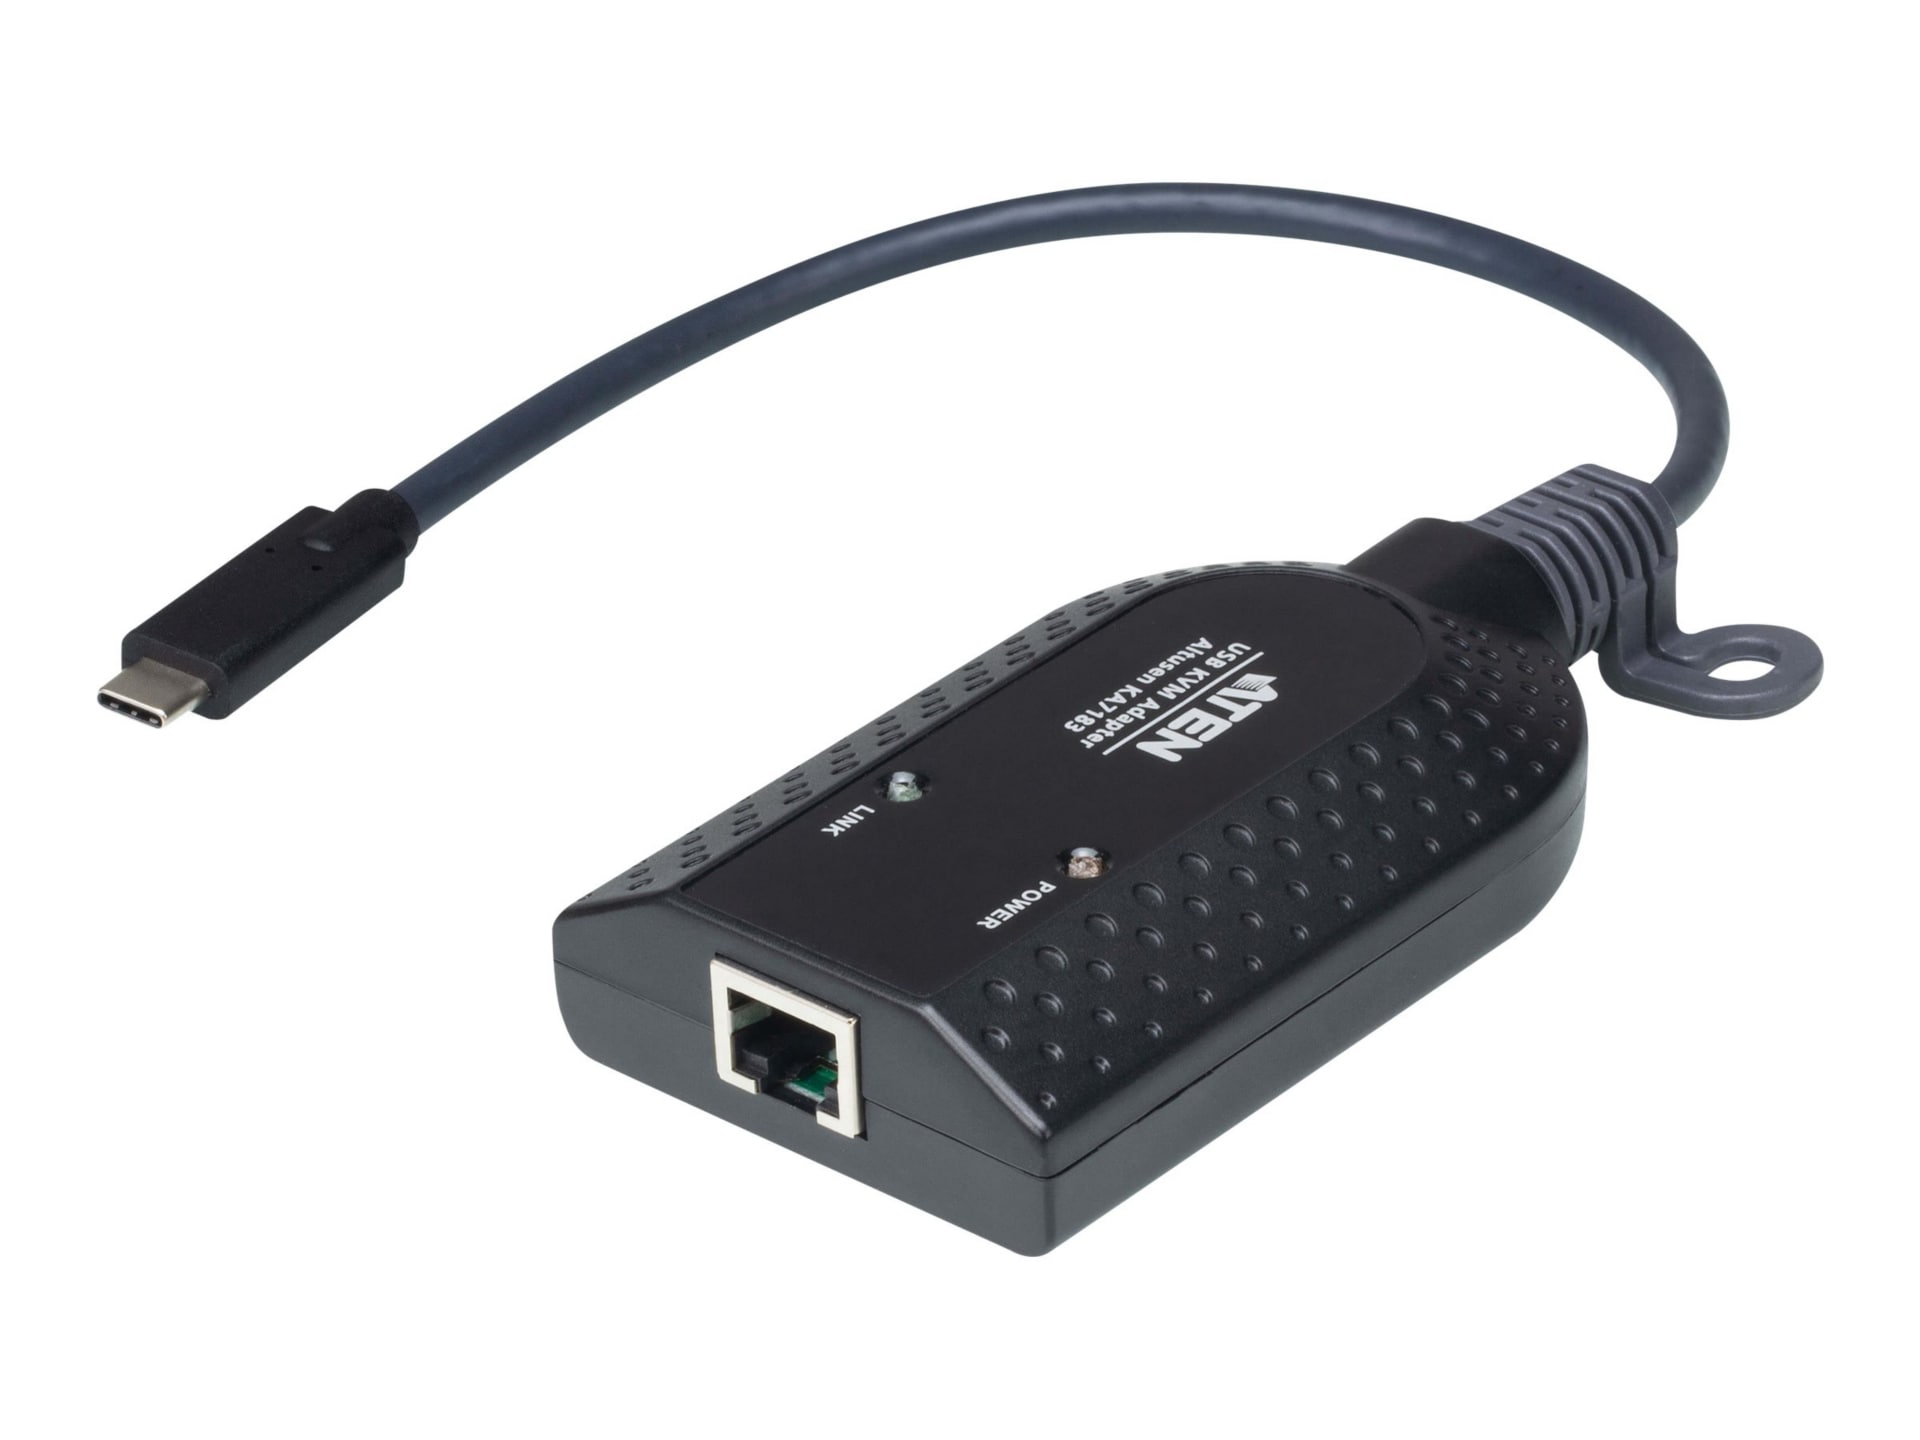 ATEN KA7183 - keyboard / video / mouse (KVM) adapter - RJ-45 to 24 pin USB-